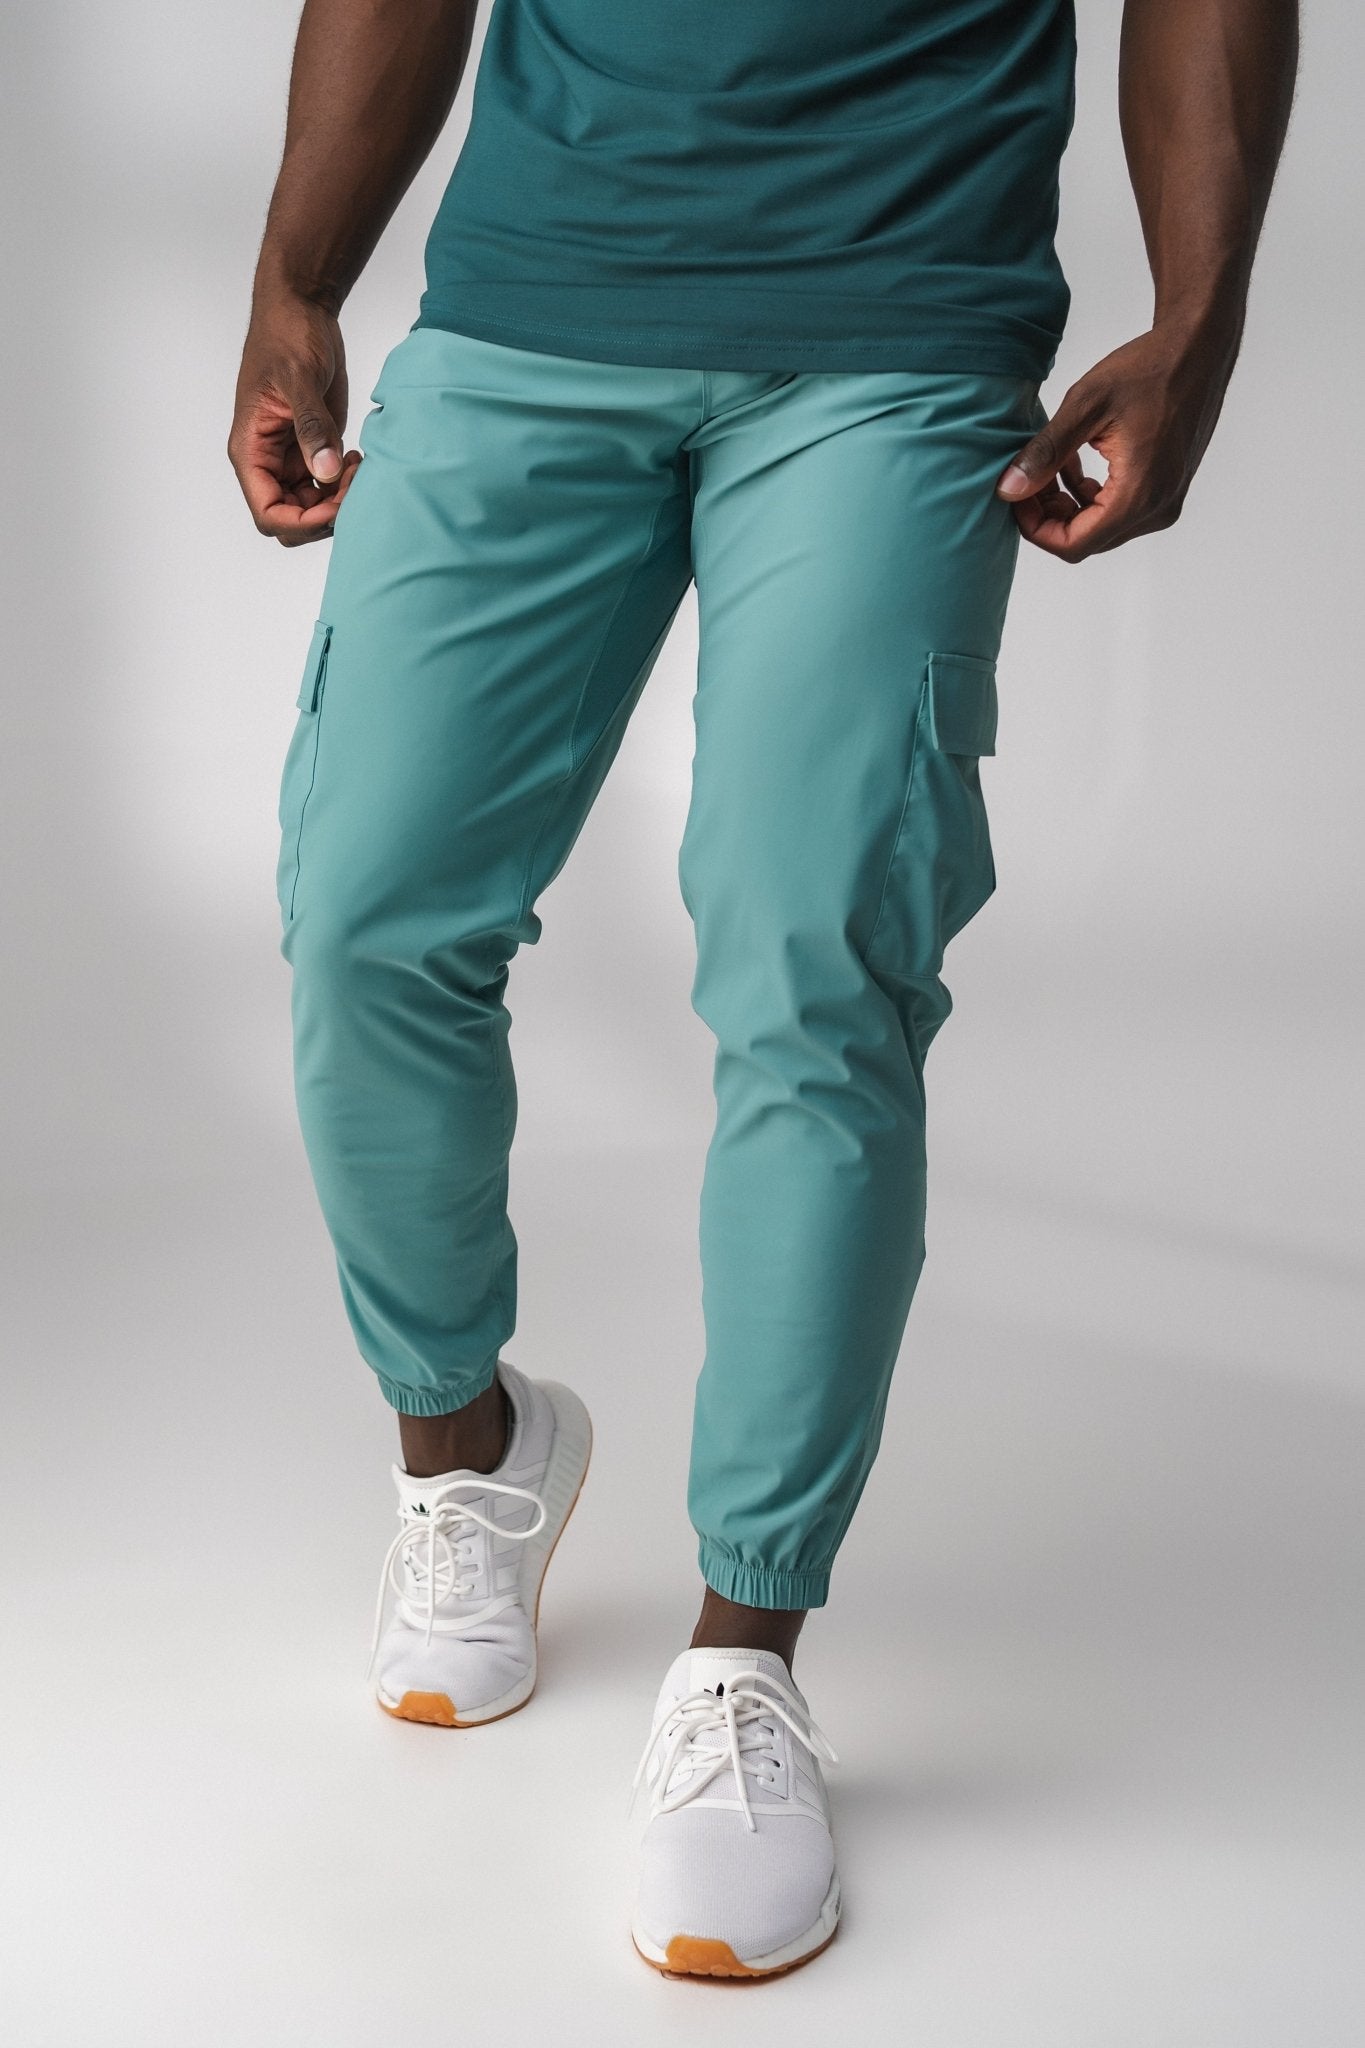 Buy Grey Track Pants for Men by Hubberholme Online | Ajio.com